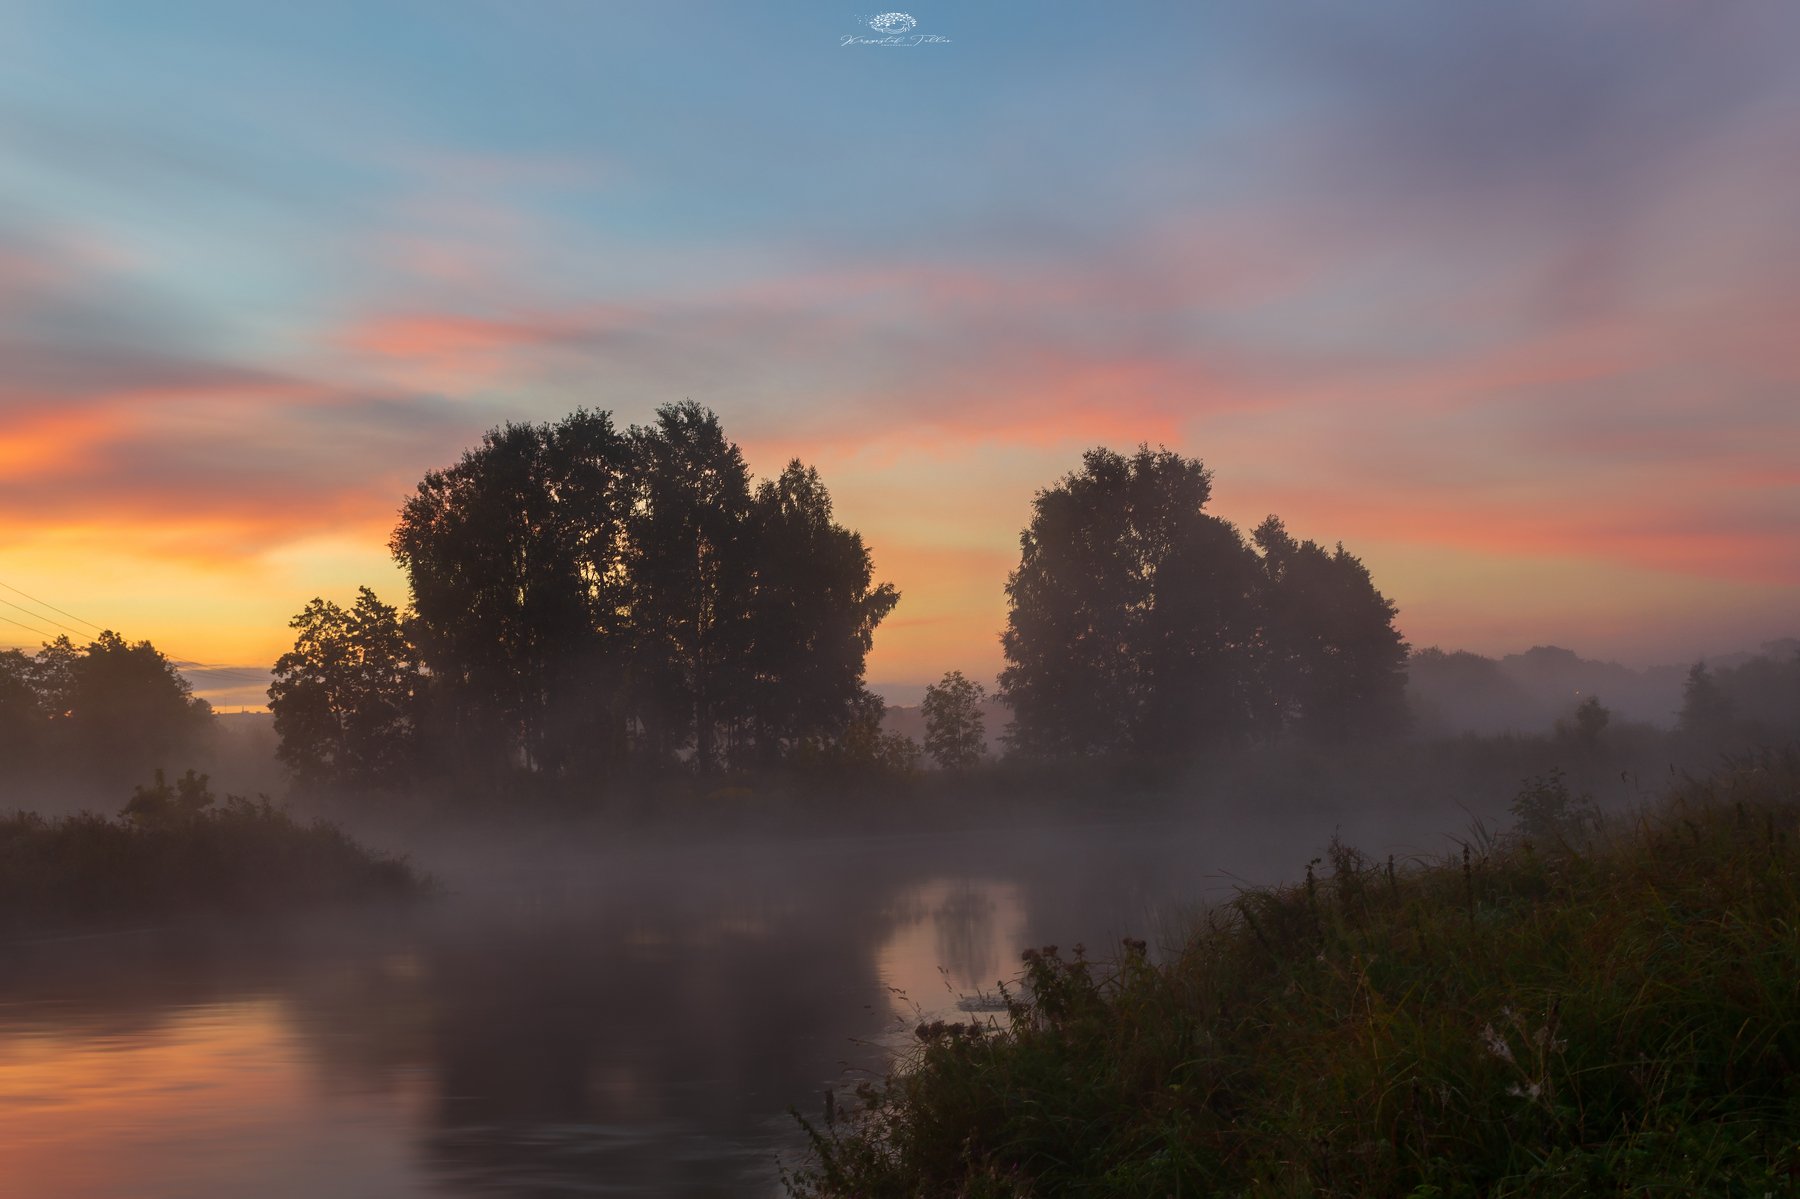 Mist,Nature Paints, Landscape, Water, Cloude, Sky, Nikon, River, Gwda, Light, Dawn, Sunrise, Trees, Mirror, , Krzysztof Tollas